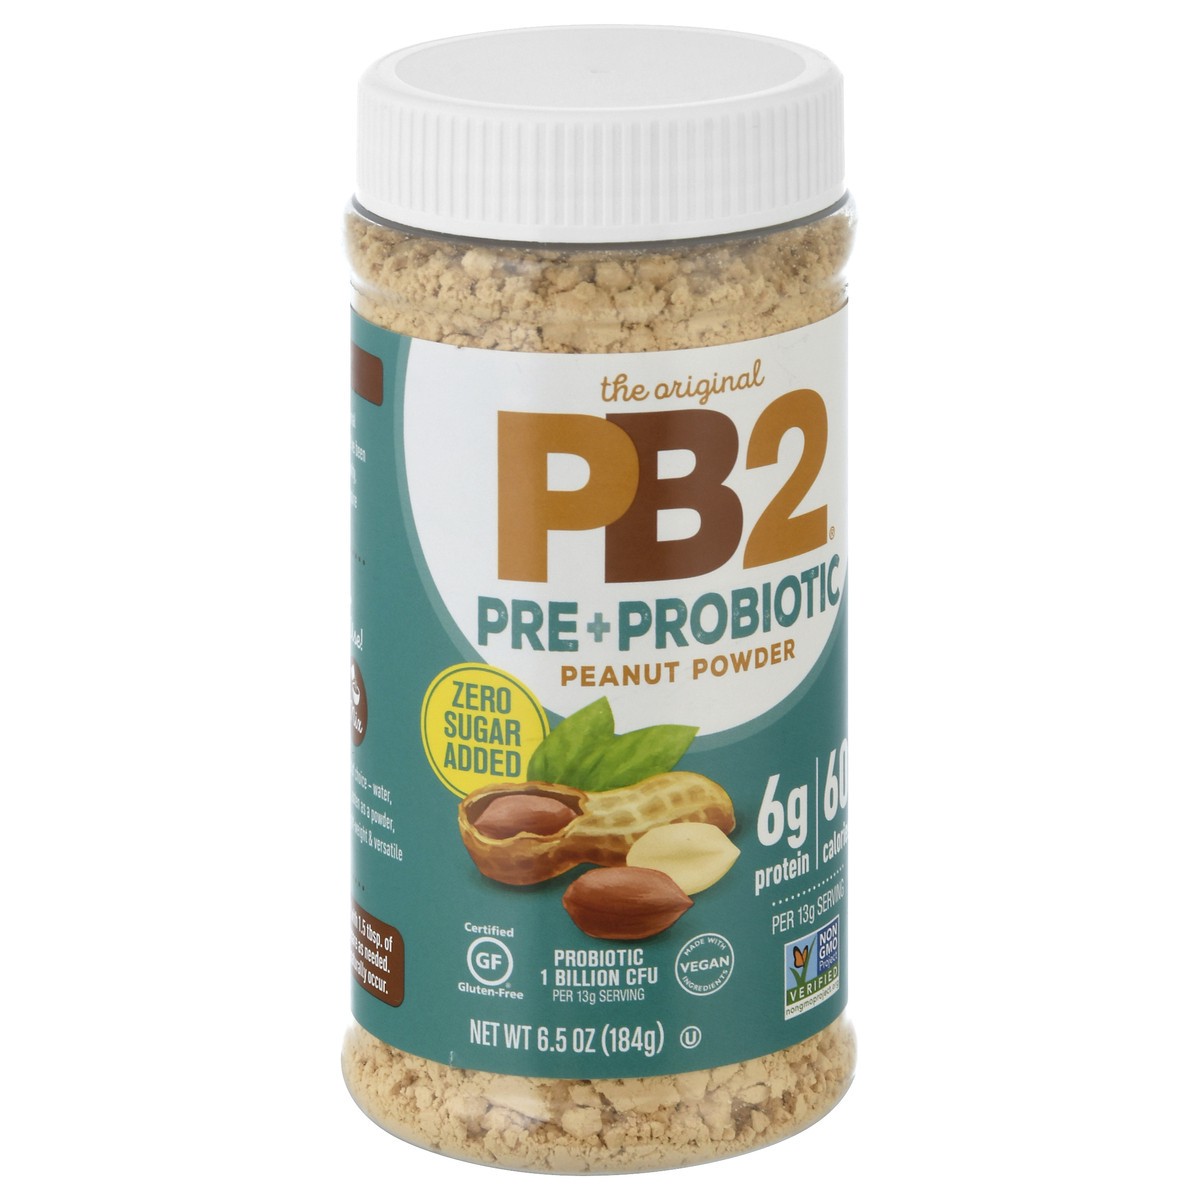 slide 2 of 9, Pb2 Peanut Powder Pre+Probiotic, 6.5 oz